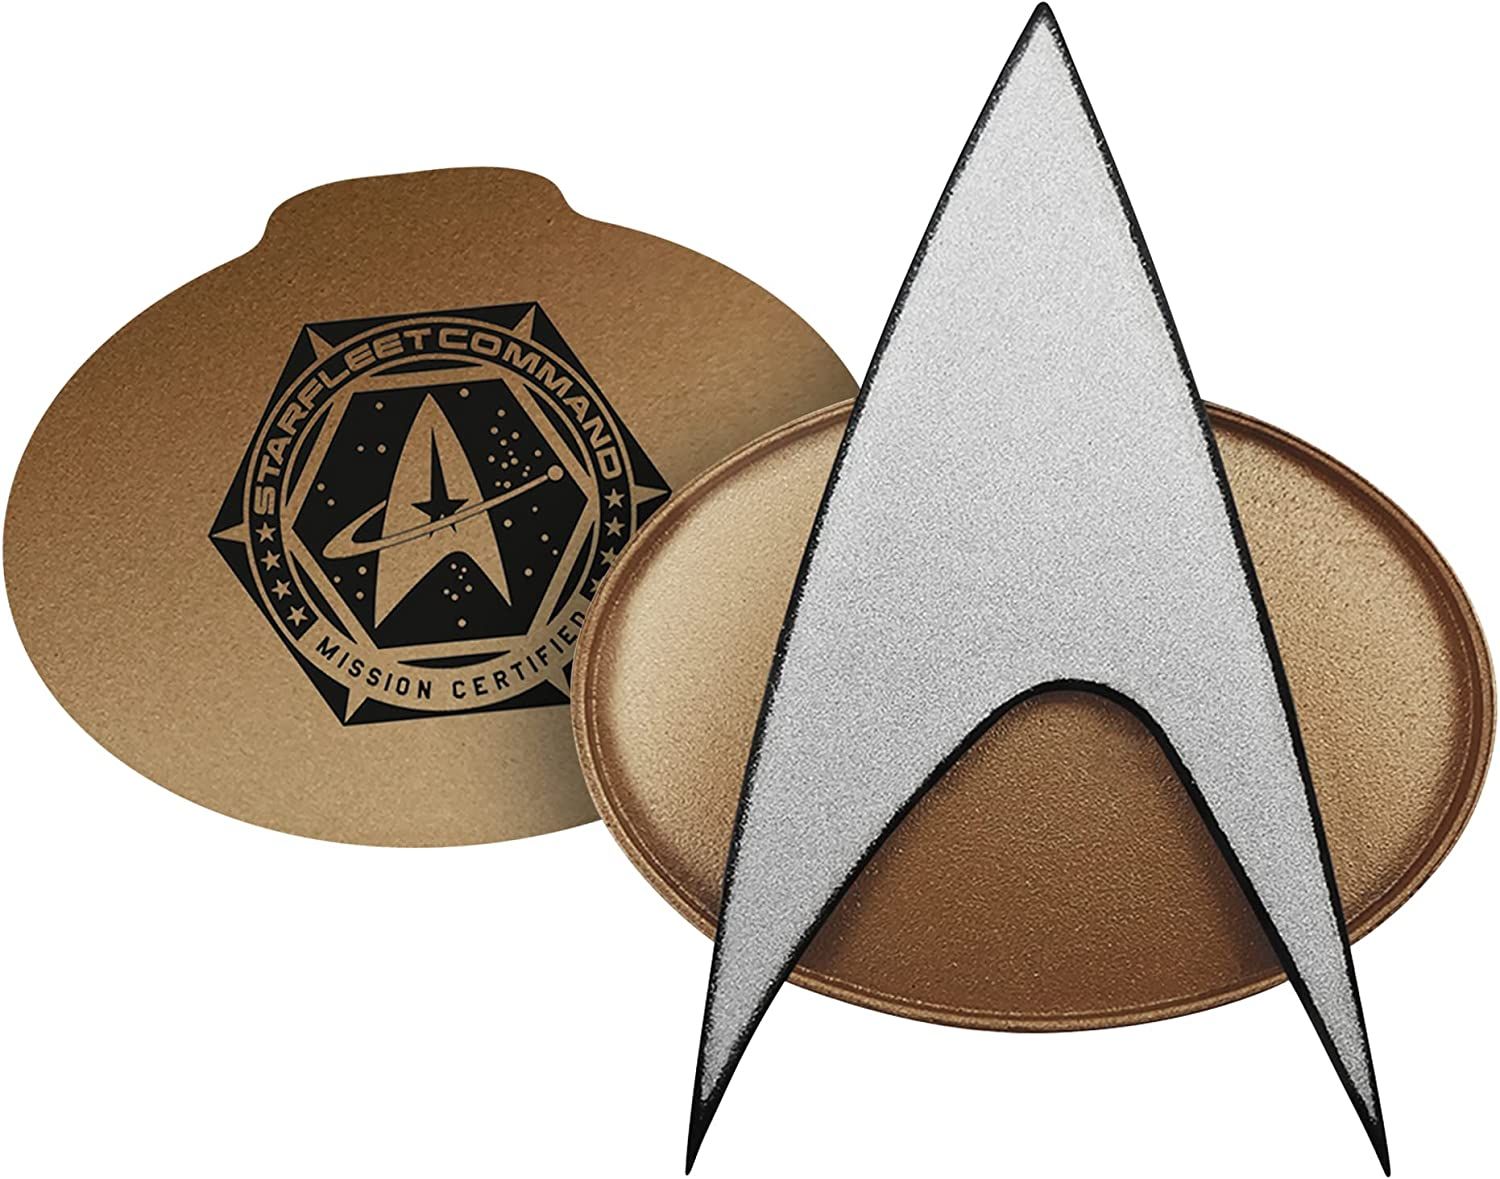 Fametek Star Trek Bluetooth Badge is one of the best accessories for Star Trek fans